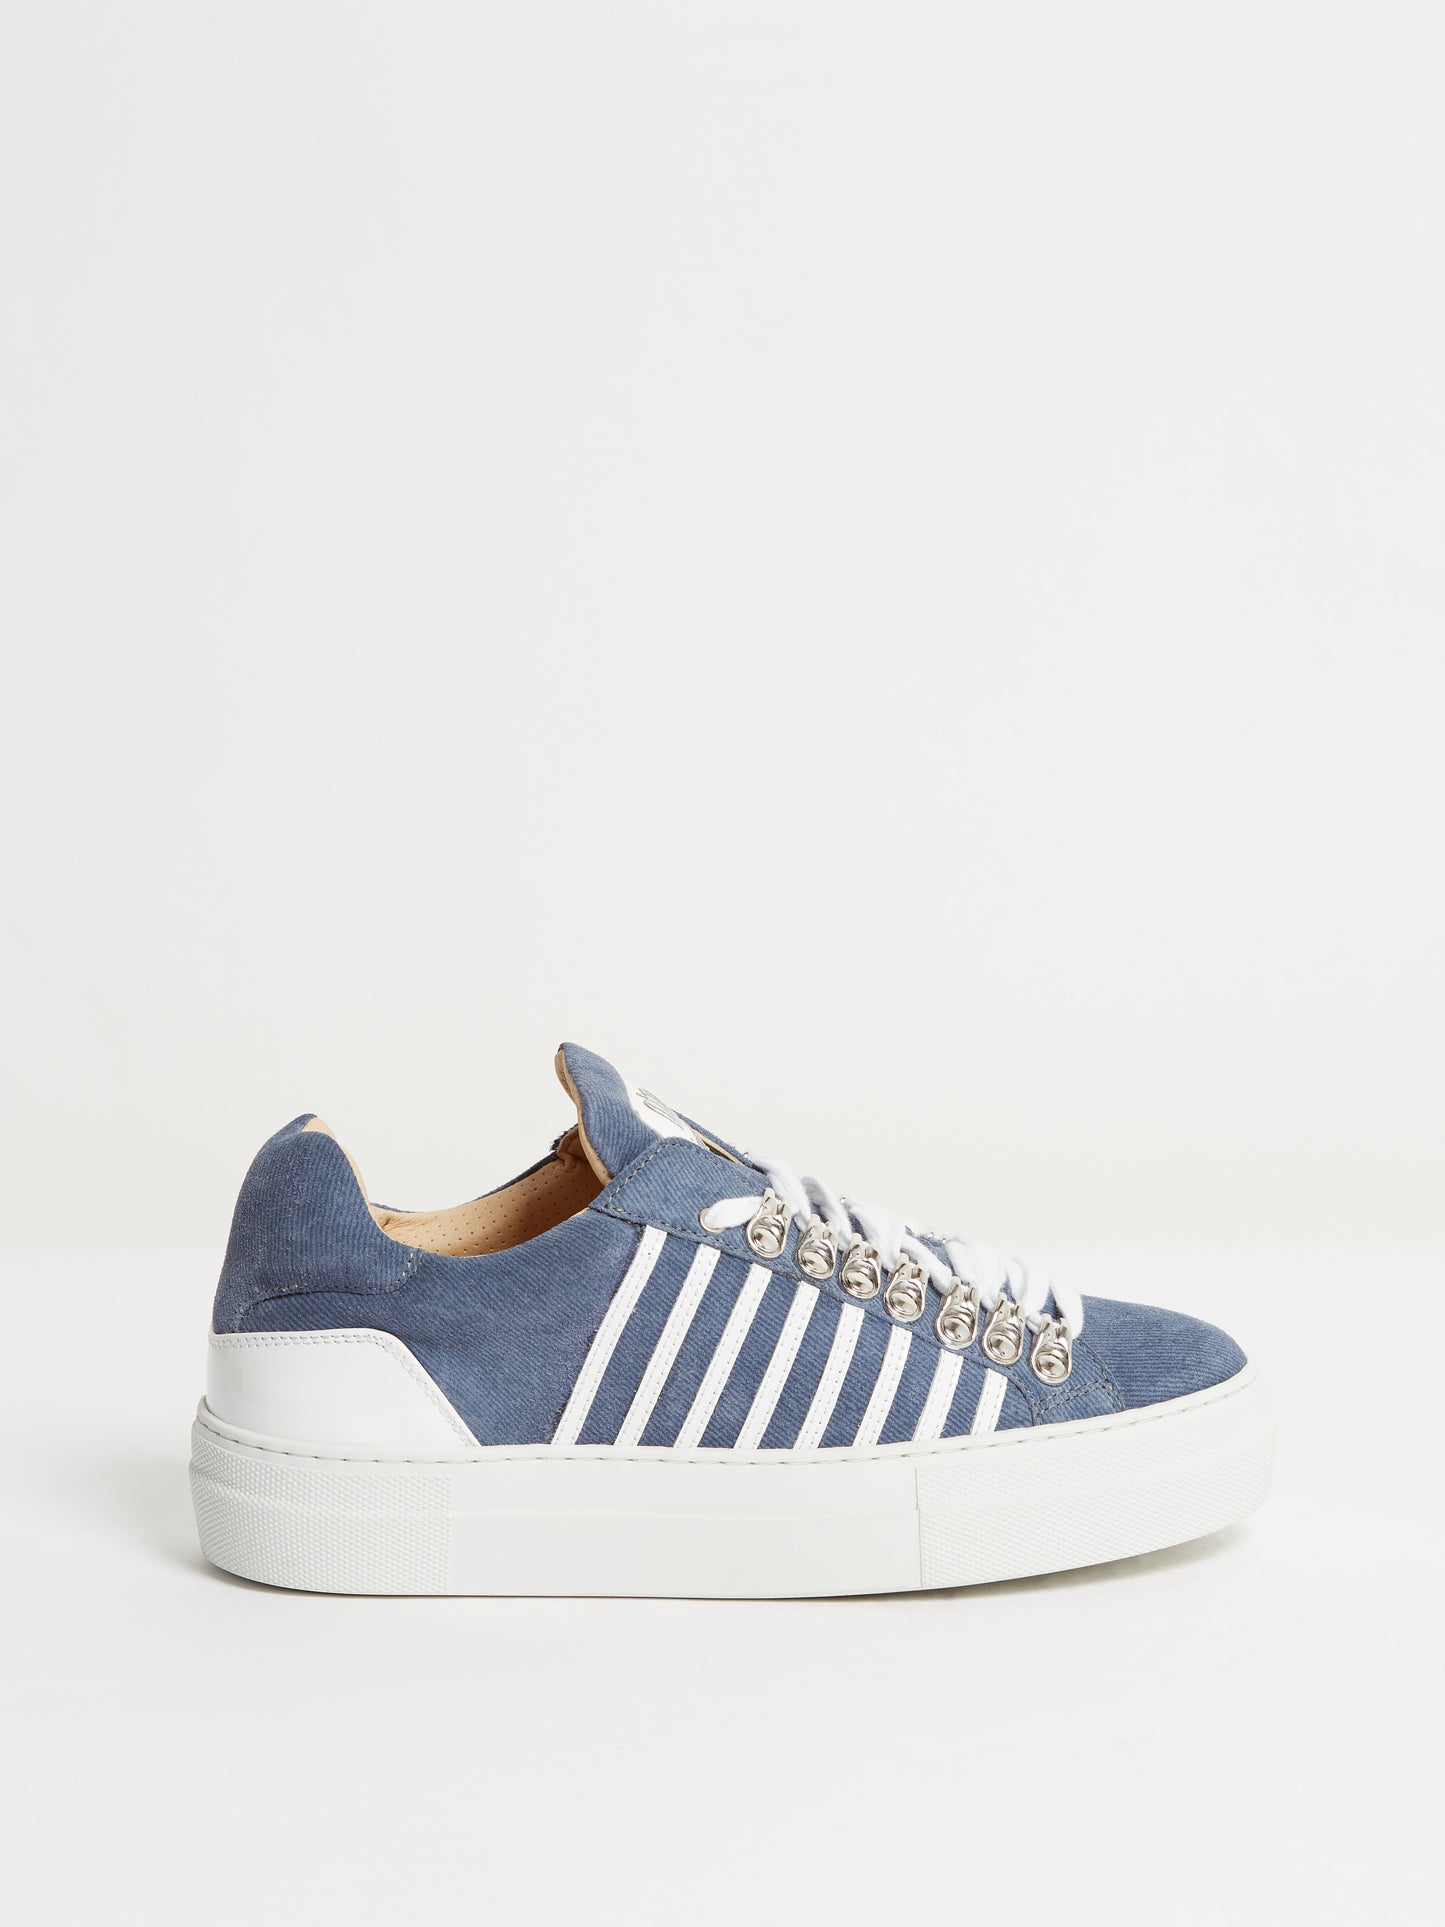 Kingsley Sky Sneakers - Sensory Blue Grey/ White - Size 38